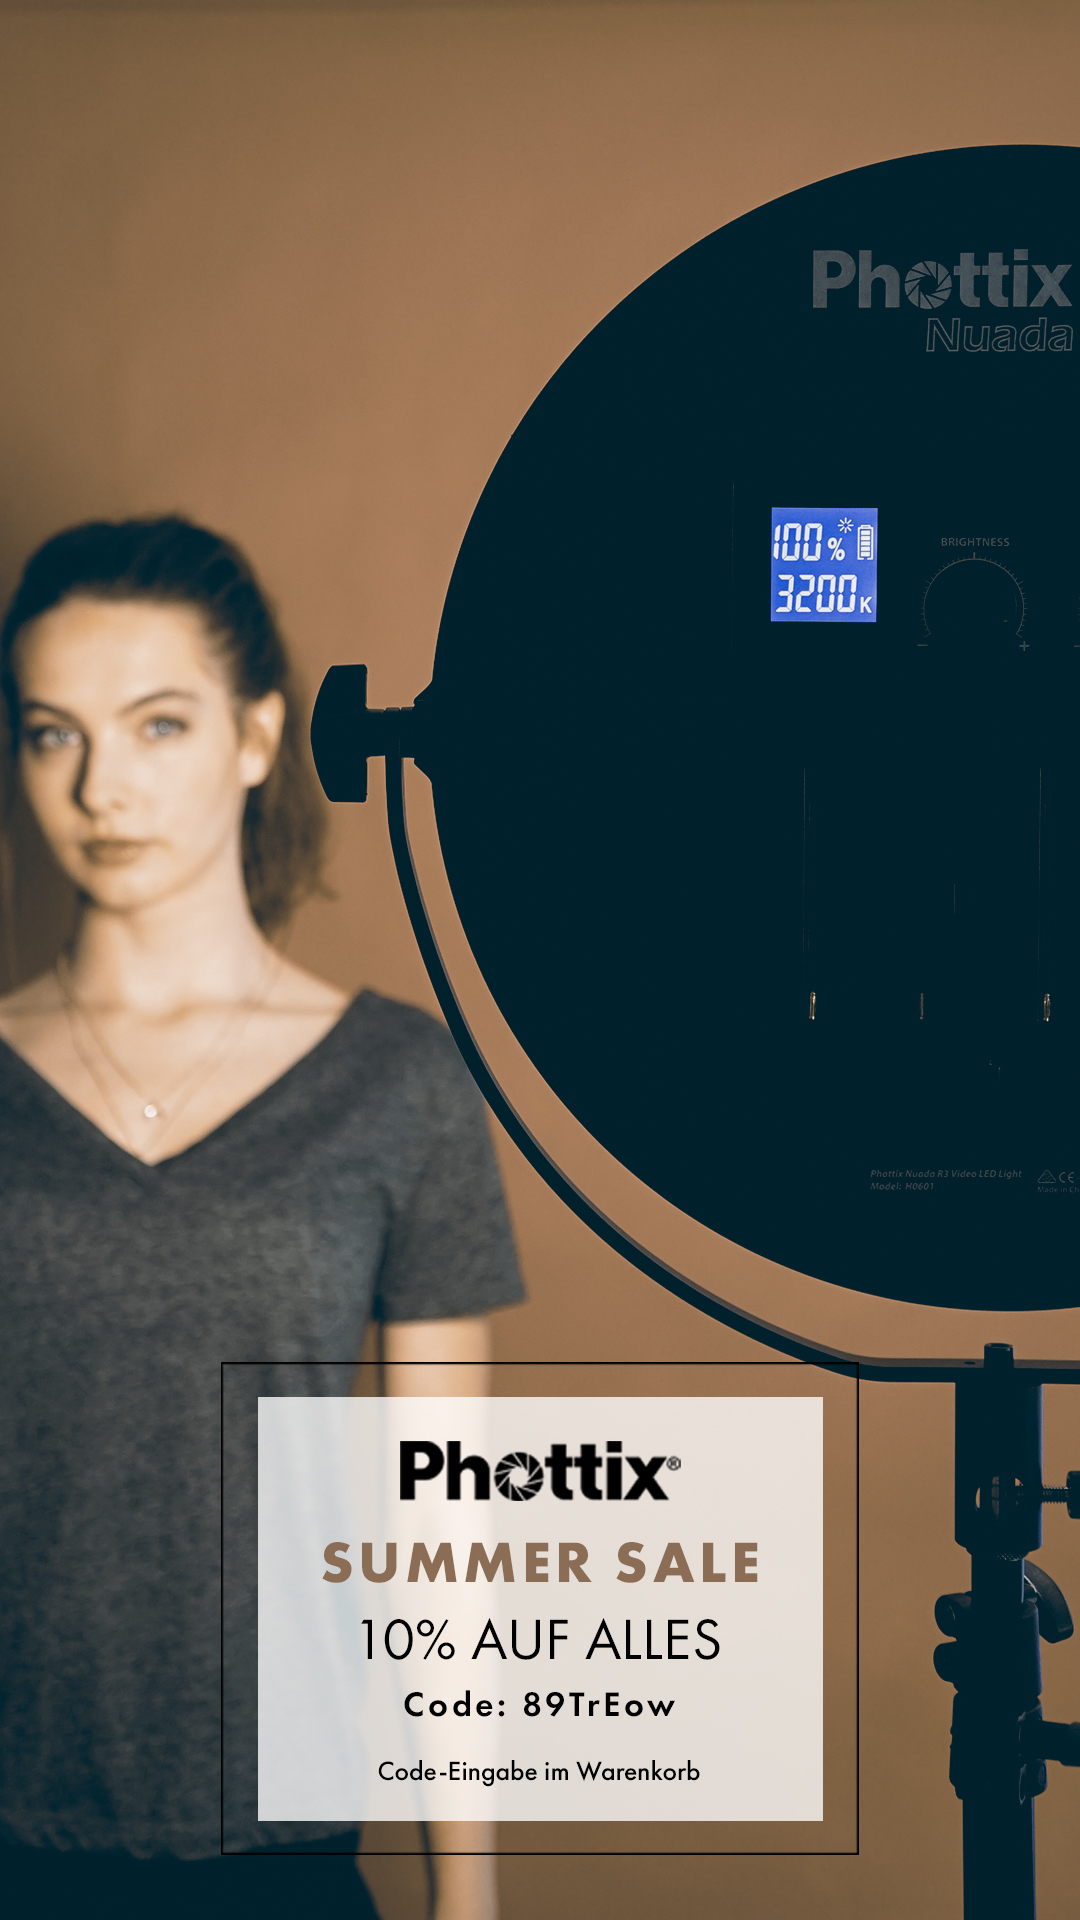 Brand: Phottix